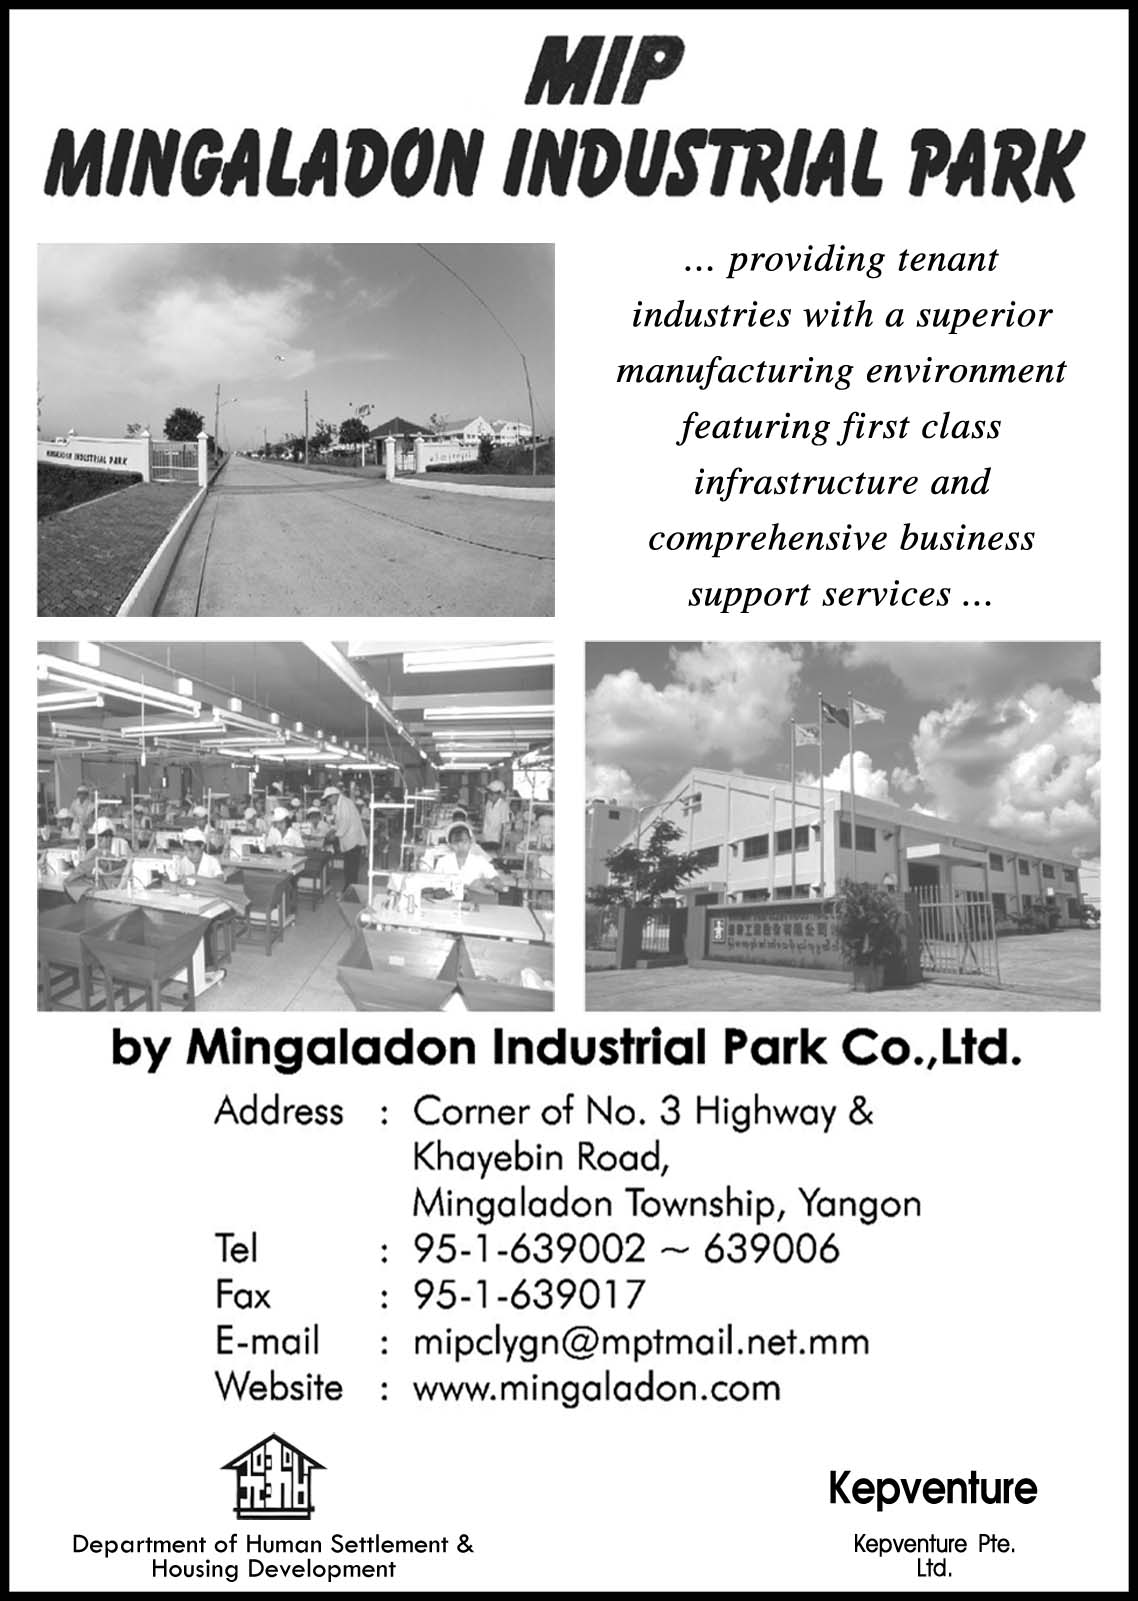 Mingalardon Industrial Park